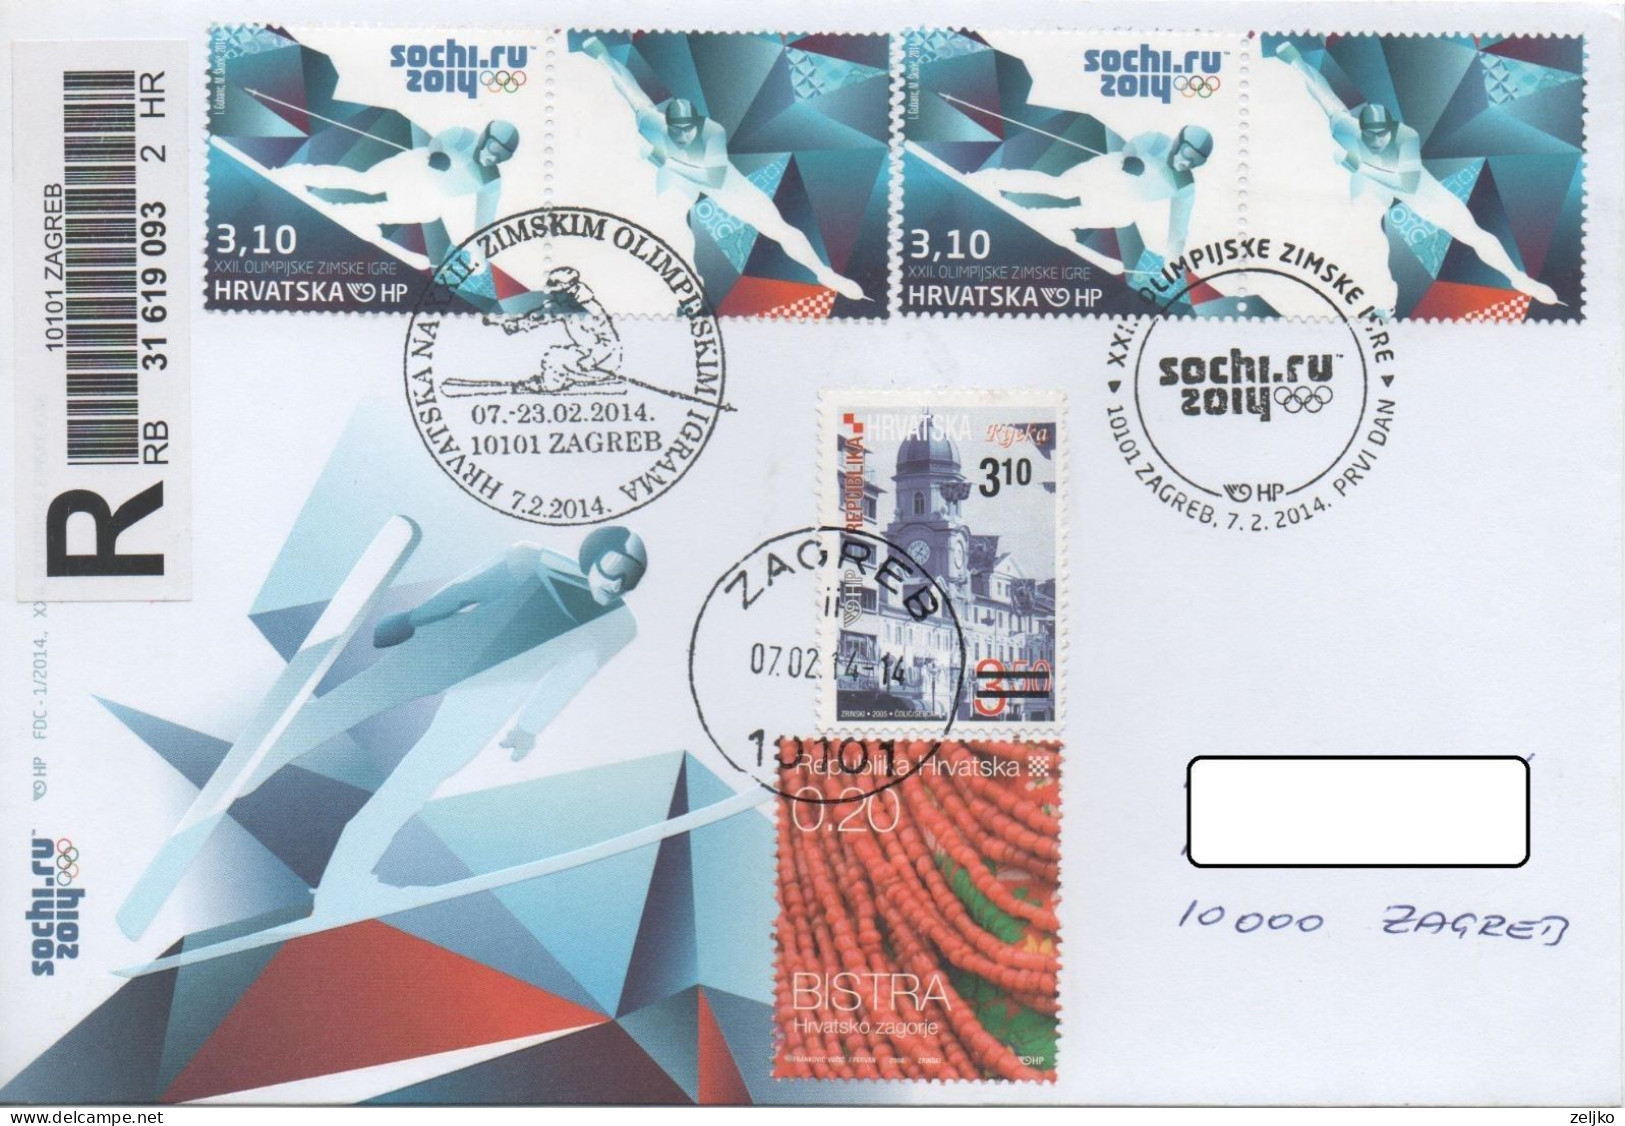 Croatia, Winter Olympic Games 2014 Sochi Russia,Michel 1110, Uprated Registered FDC, Stamp + Vignette, 2 Spec. Cancels - Winter 2014: Sochi